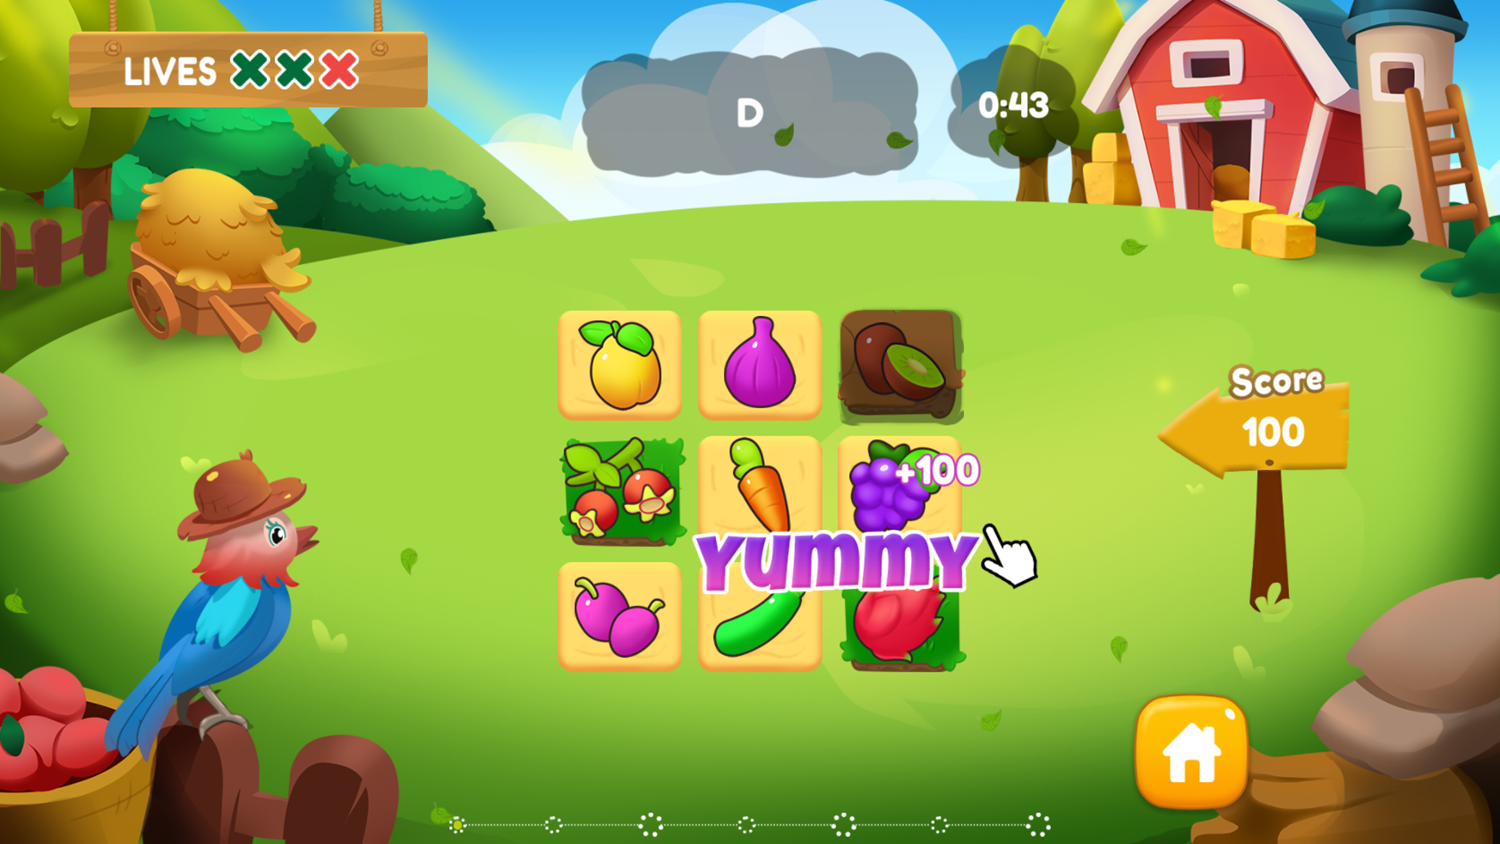 The Farm Land Game Level Play Screenshot.